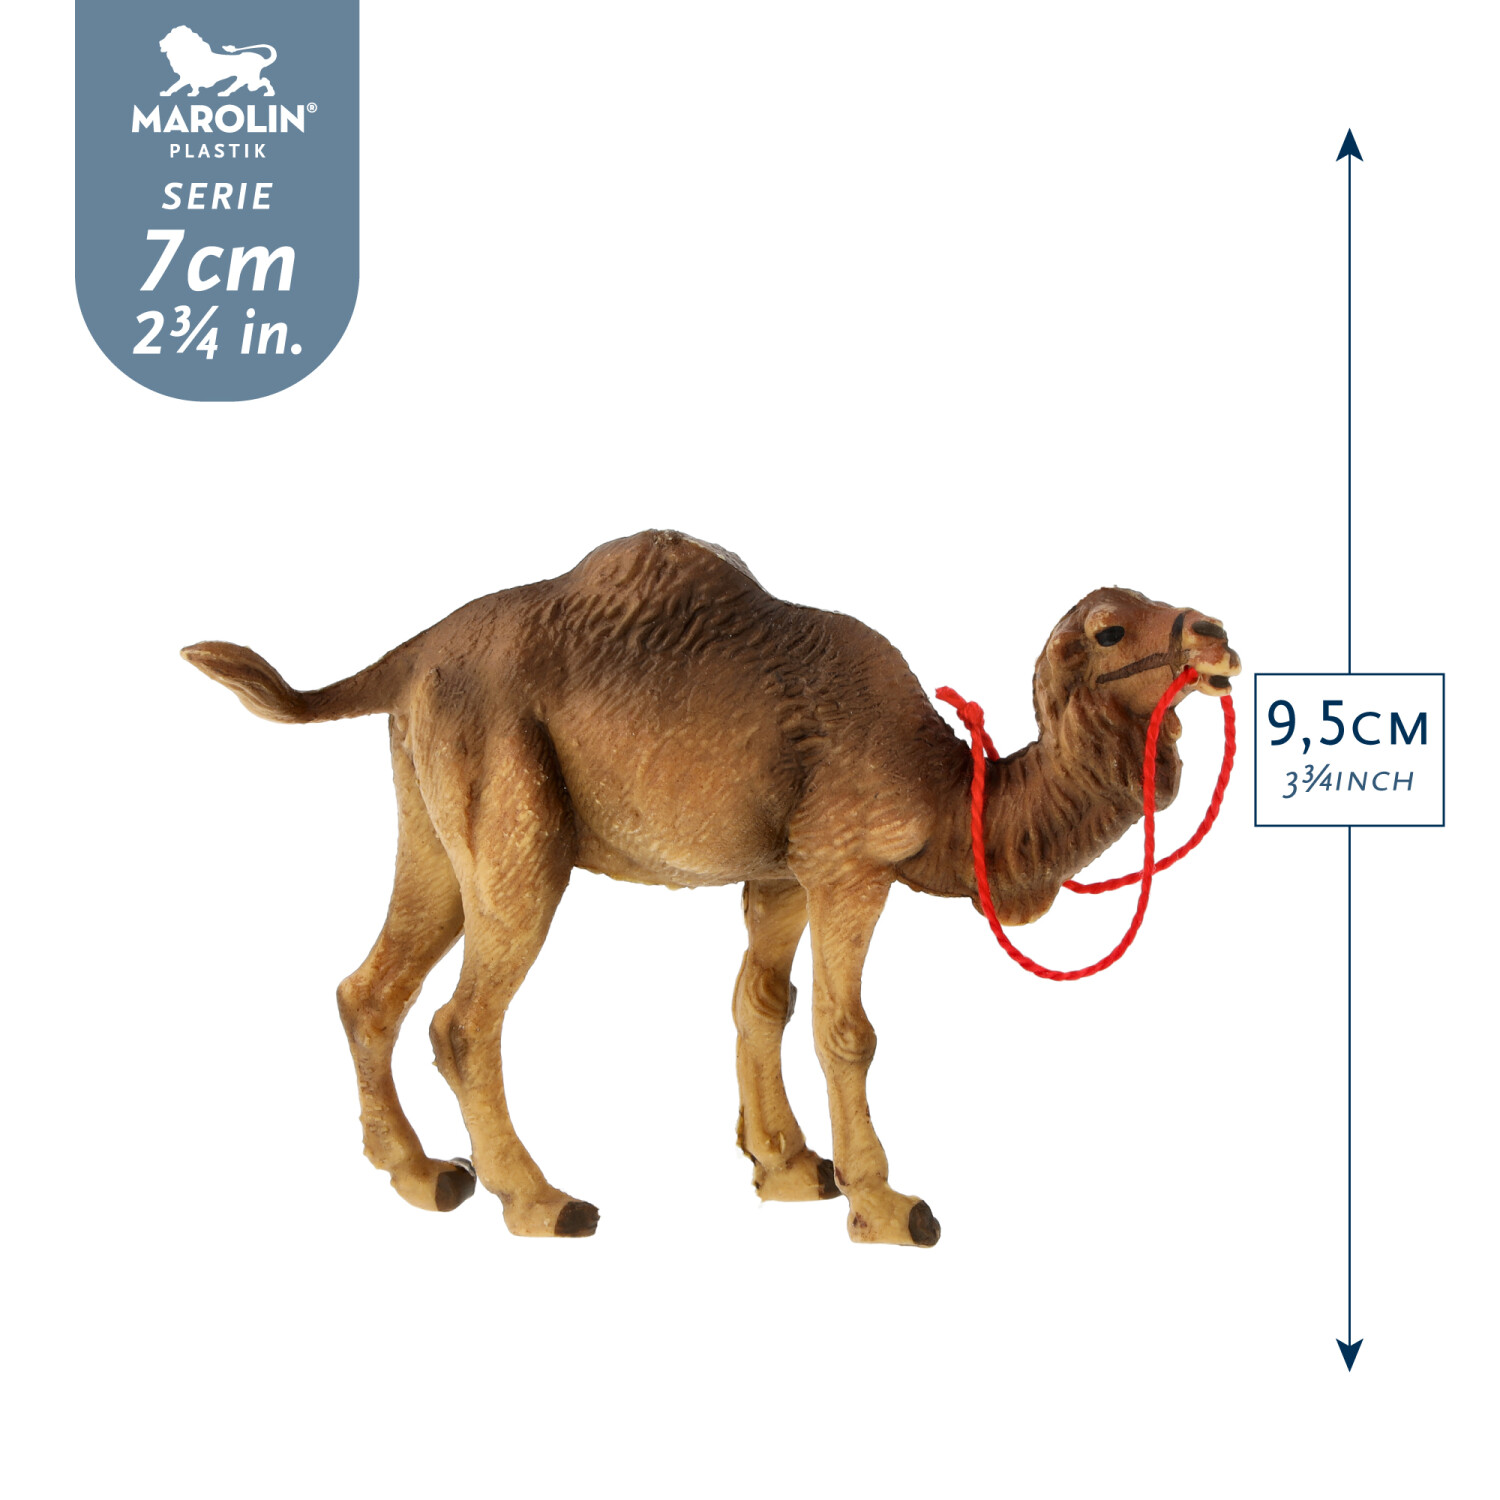 Kamel stehend, zu 7cm Fig. (Kunststoff)  - Marolin Plastik - Krippenfigur aus Kunststoff - made in Germany